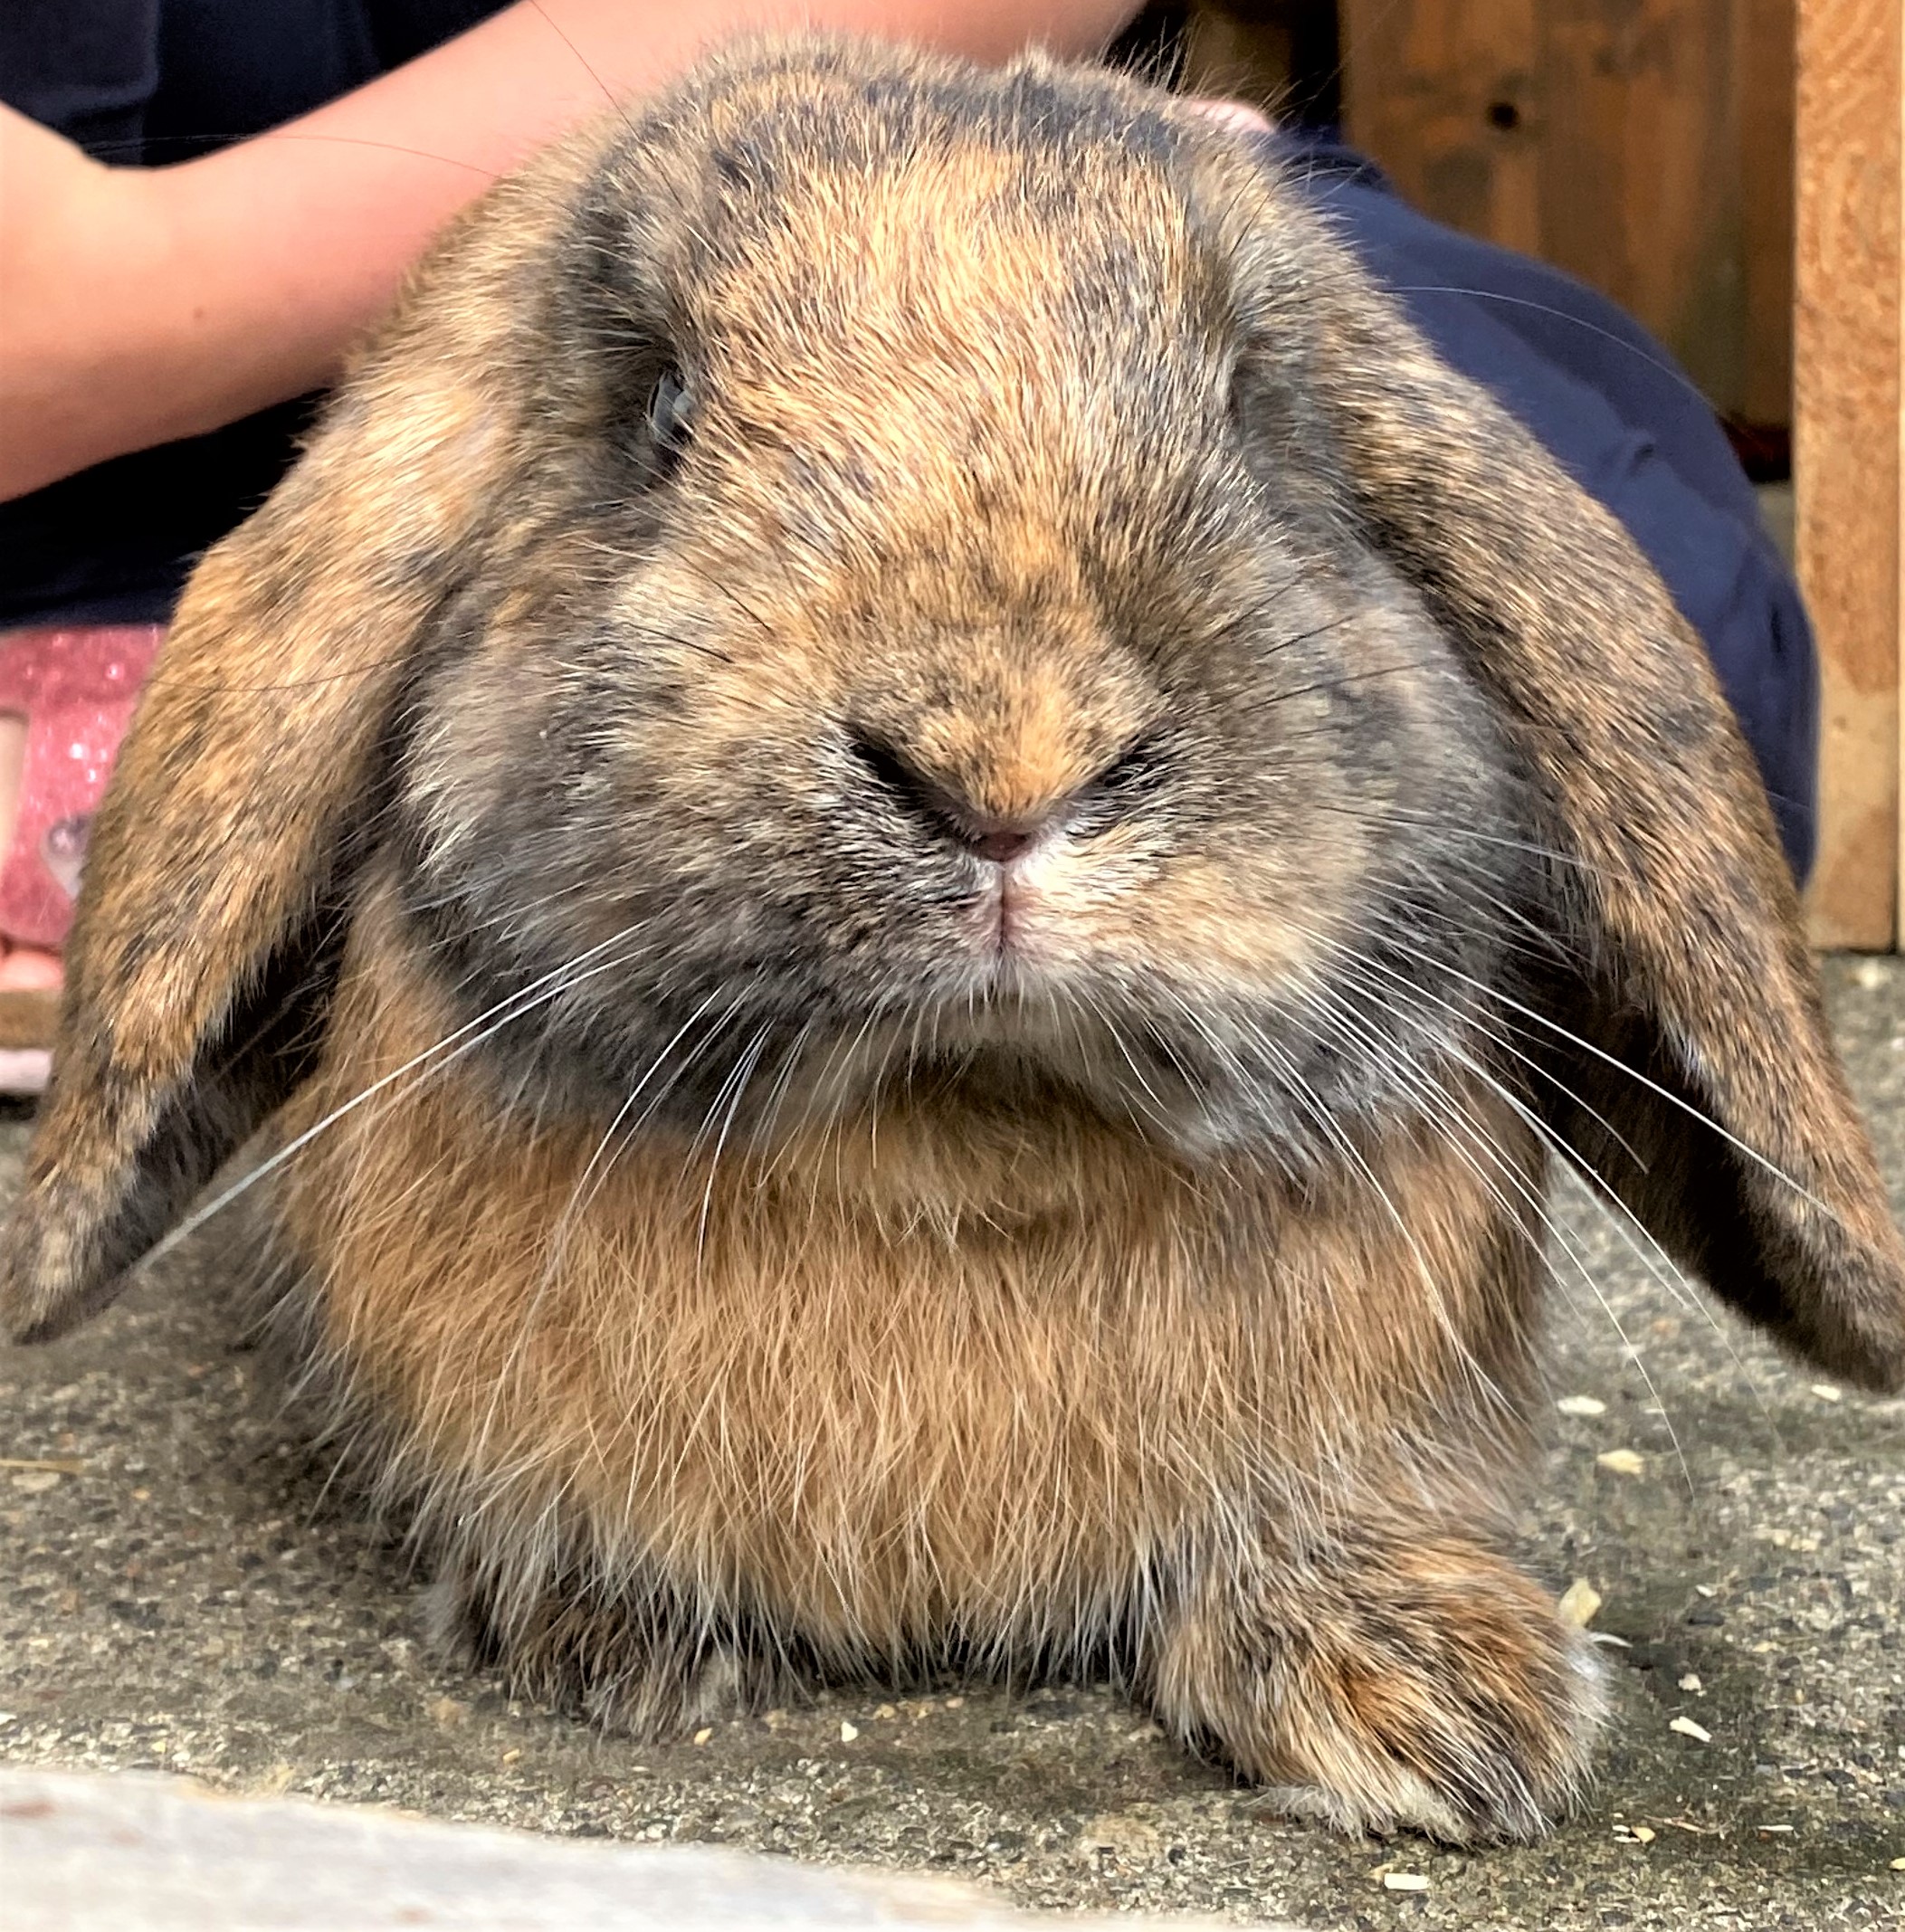 Neues Zuhause – Kaninchen Frido (ehemals Lacky) grüßt